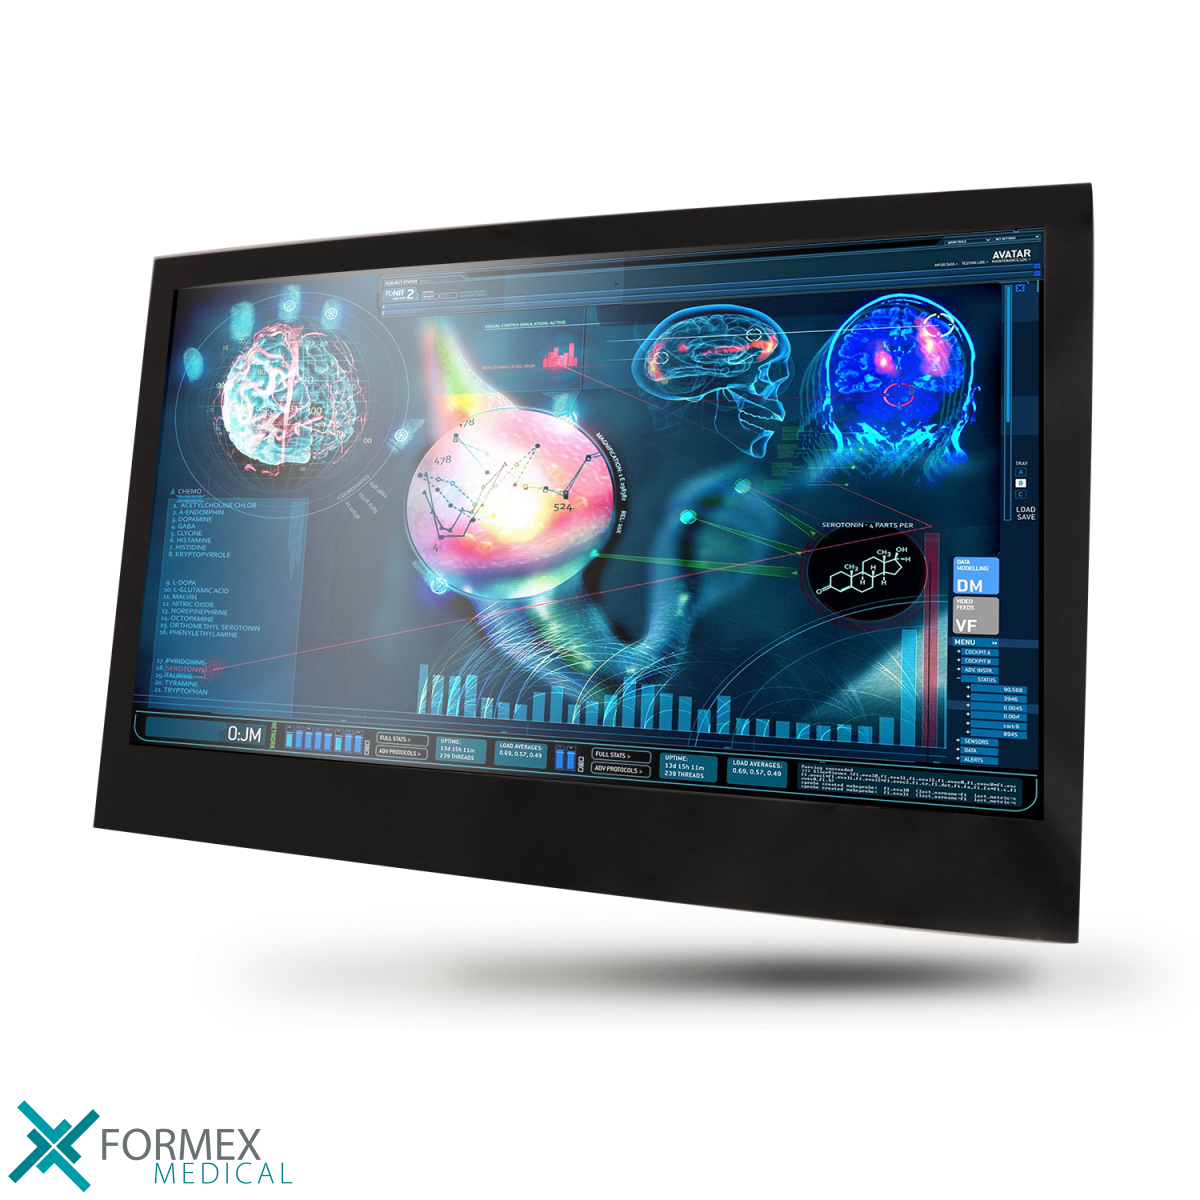 onyx MEDDP-627, medical displays, medische schermen, eizo medical monitor, medische monitoren, eizo medical, medische beeldschermen, diagnostische monitoren, diagnostiek monitoren, eizo monitor